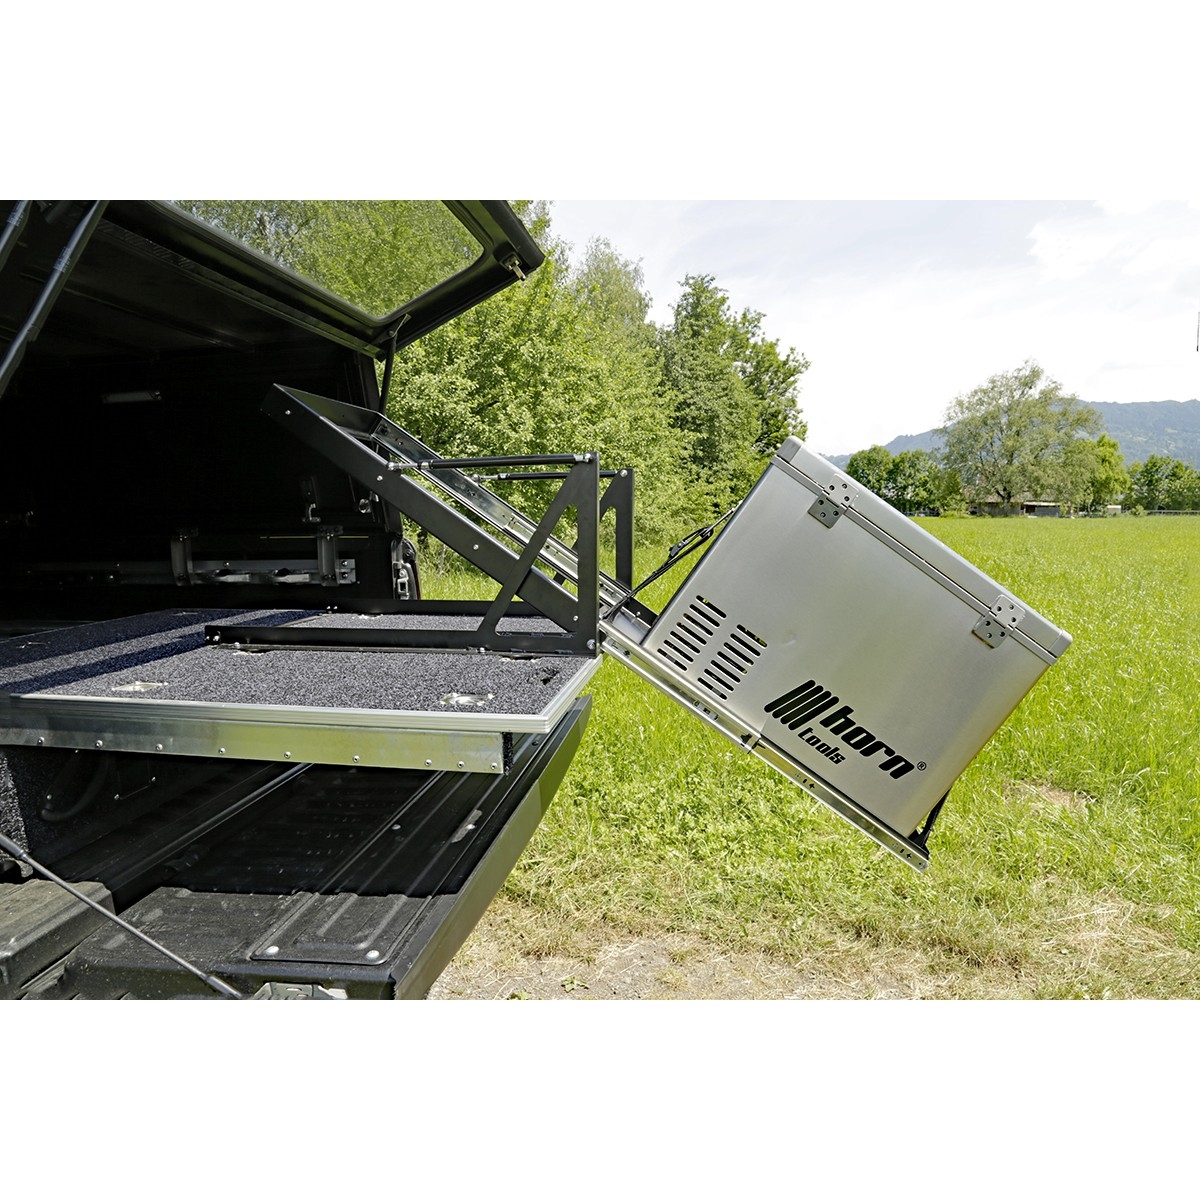  Ihr zuverlässiger Partner in Offroad-Tuning! - Kühlbox Auszug  kippbar 750x430mm Aluminium PickUp Vollauszug Cargo Slide Kühlschrank Box  Ladeboden